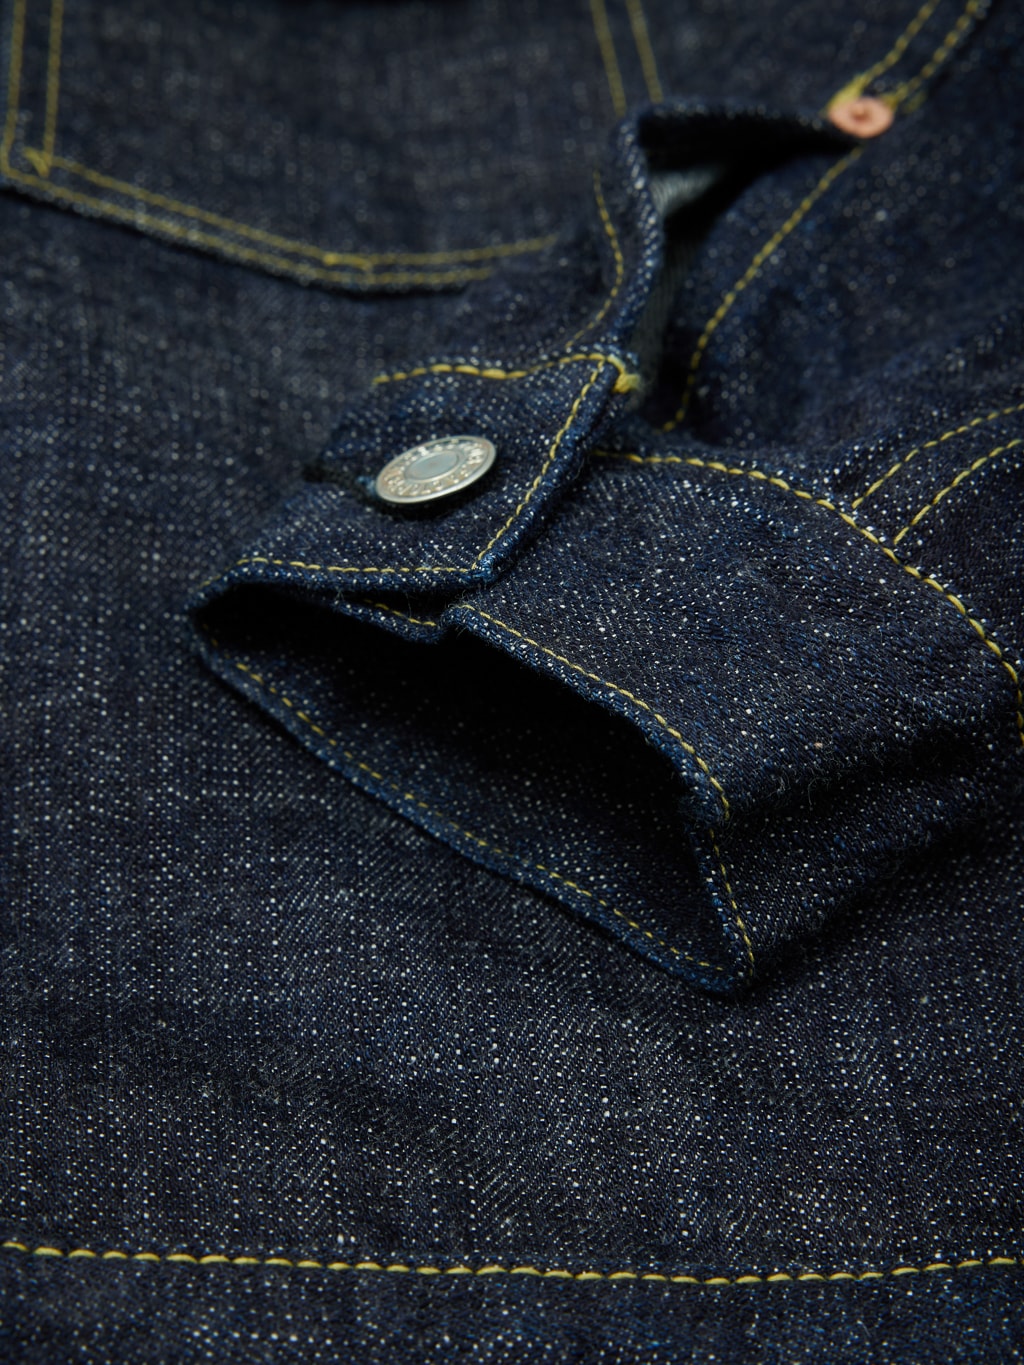 Fob factory Type III denim jacket selvedge cuff detail